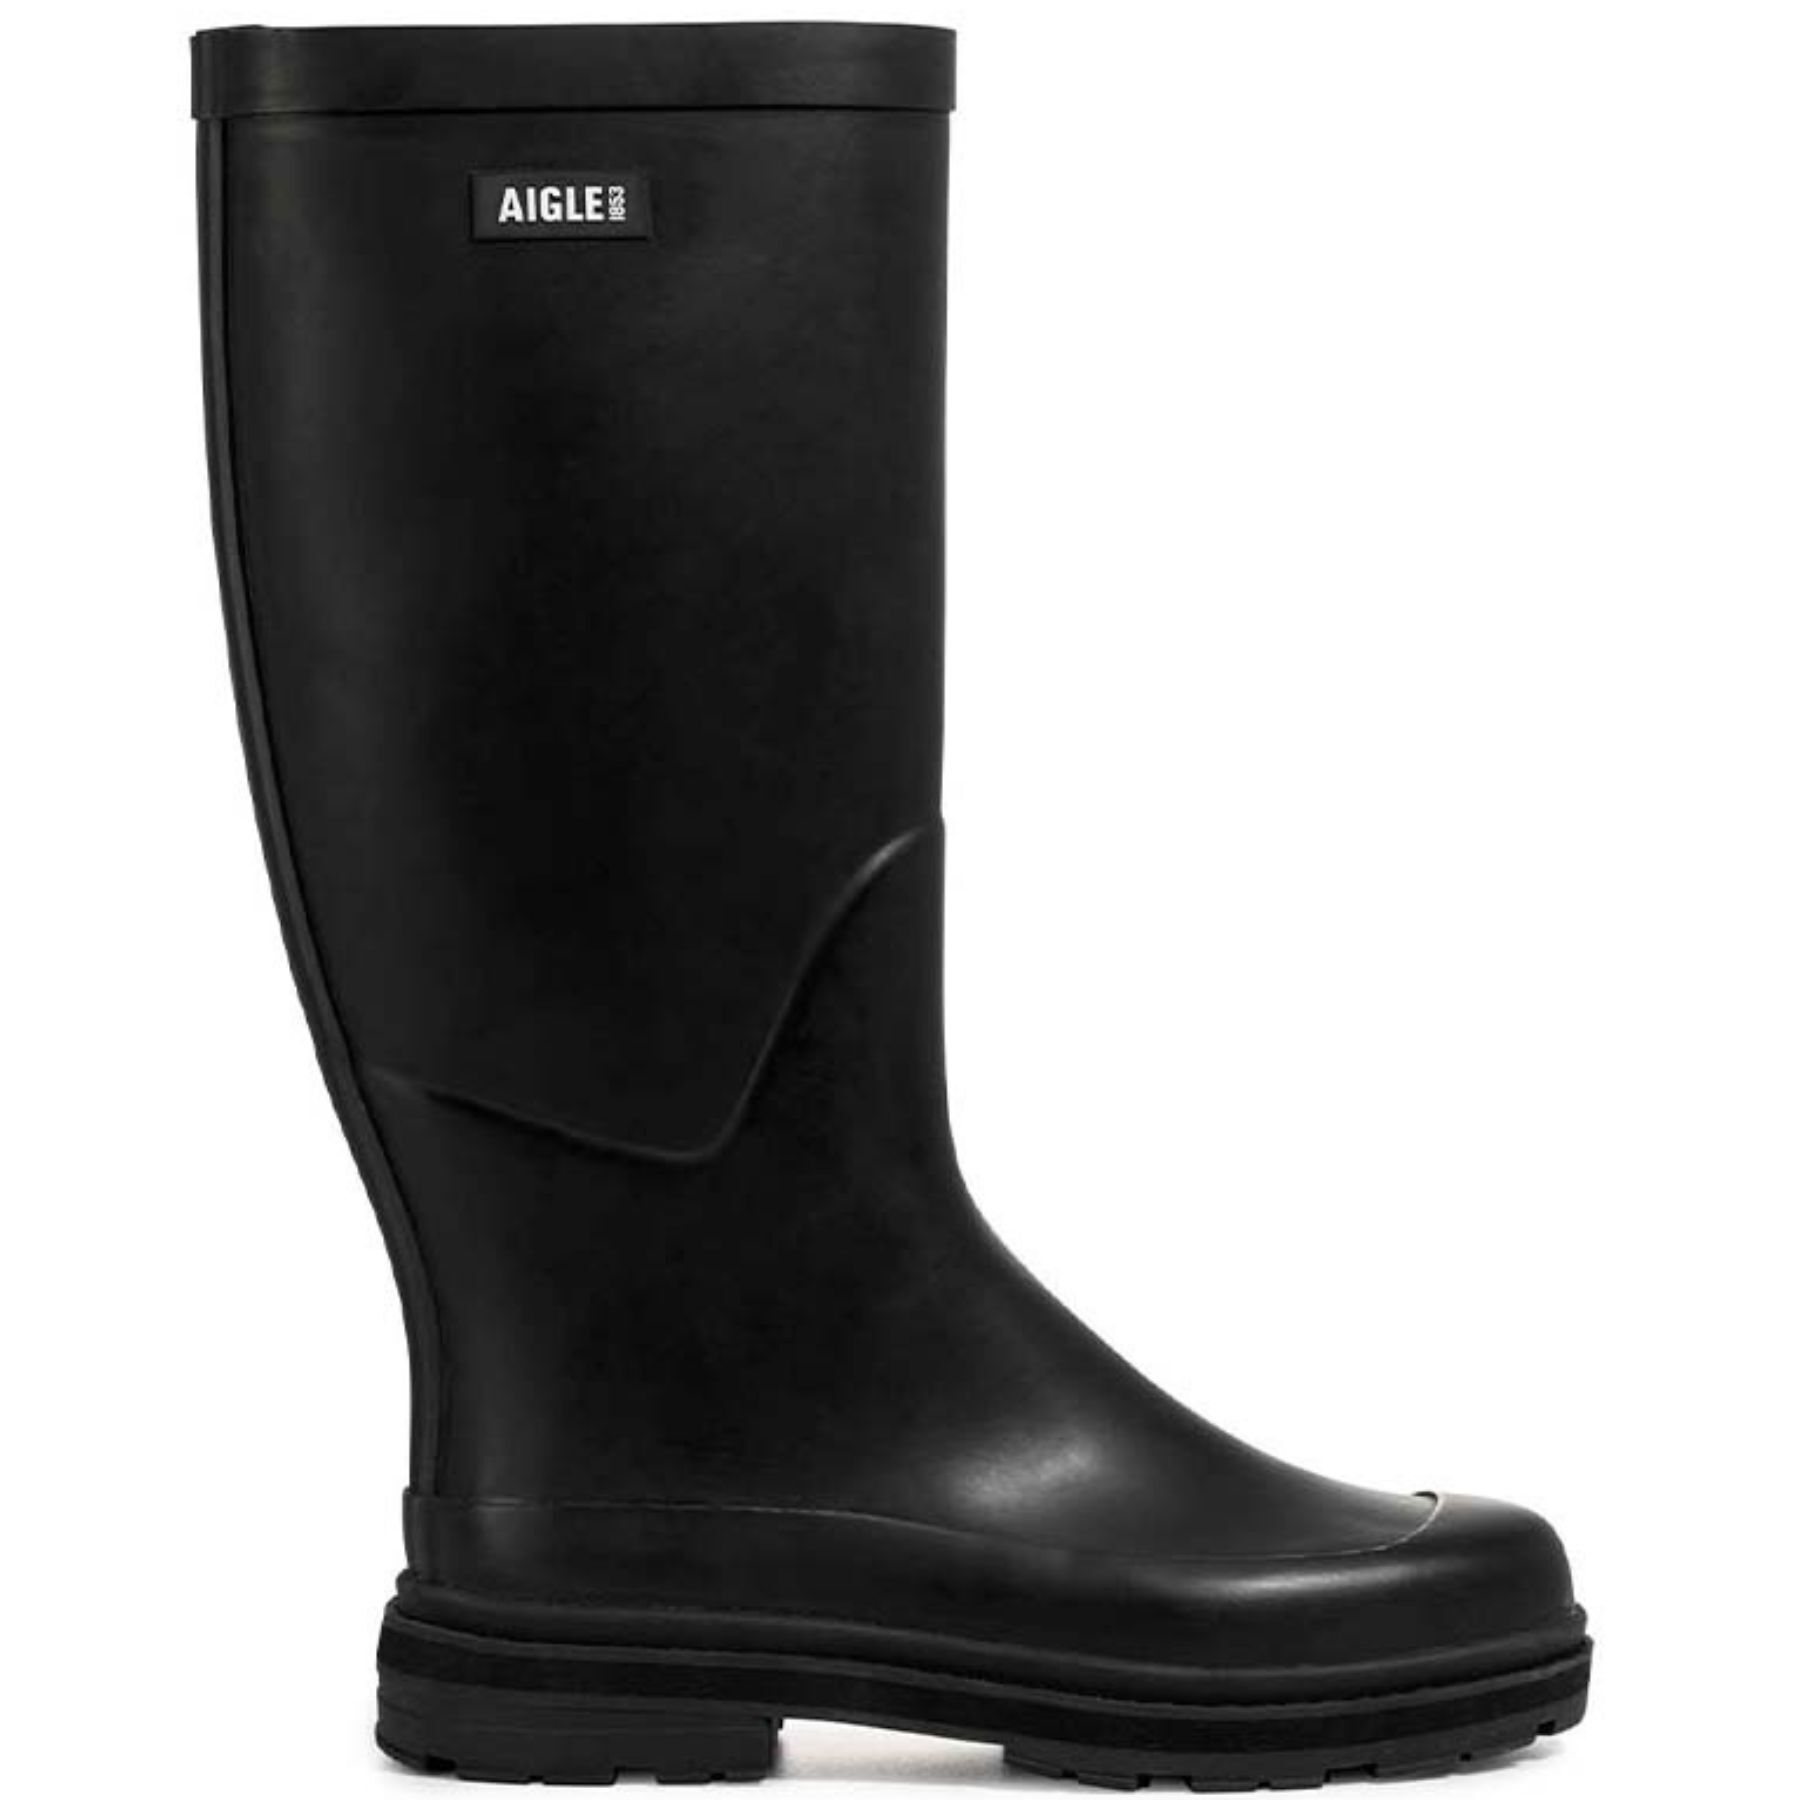 Aigle Ultra Rain - Wellington boots - Women's